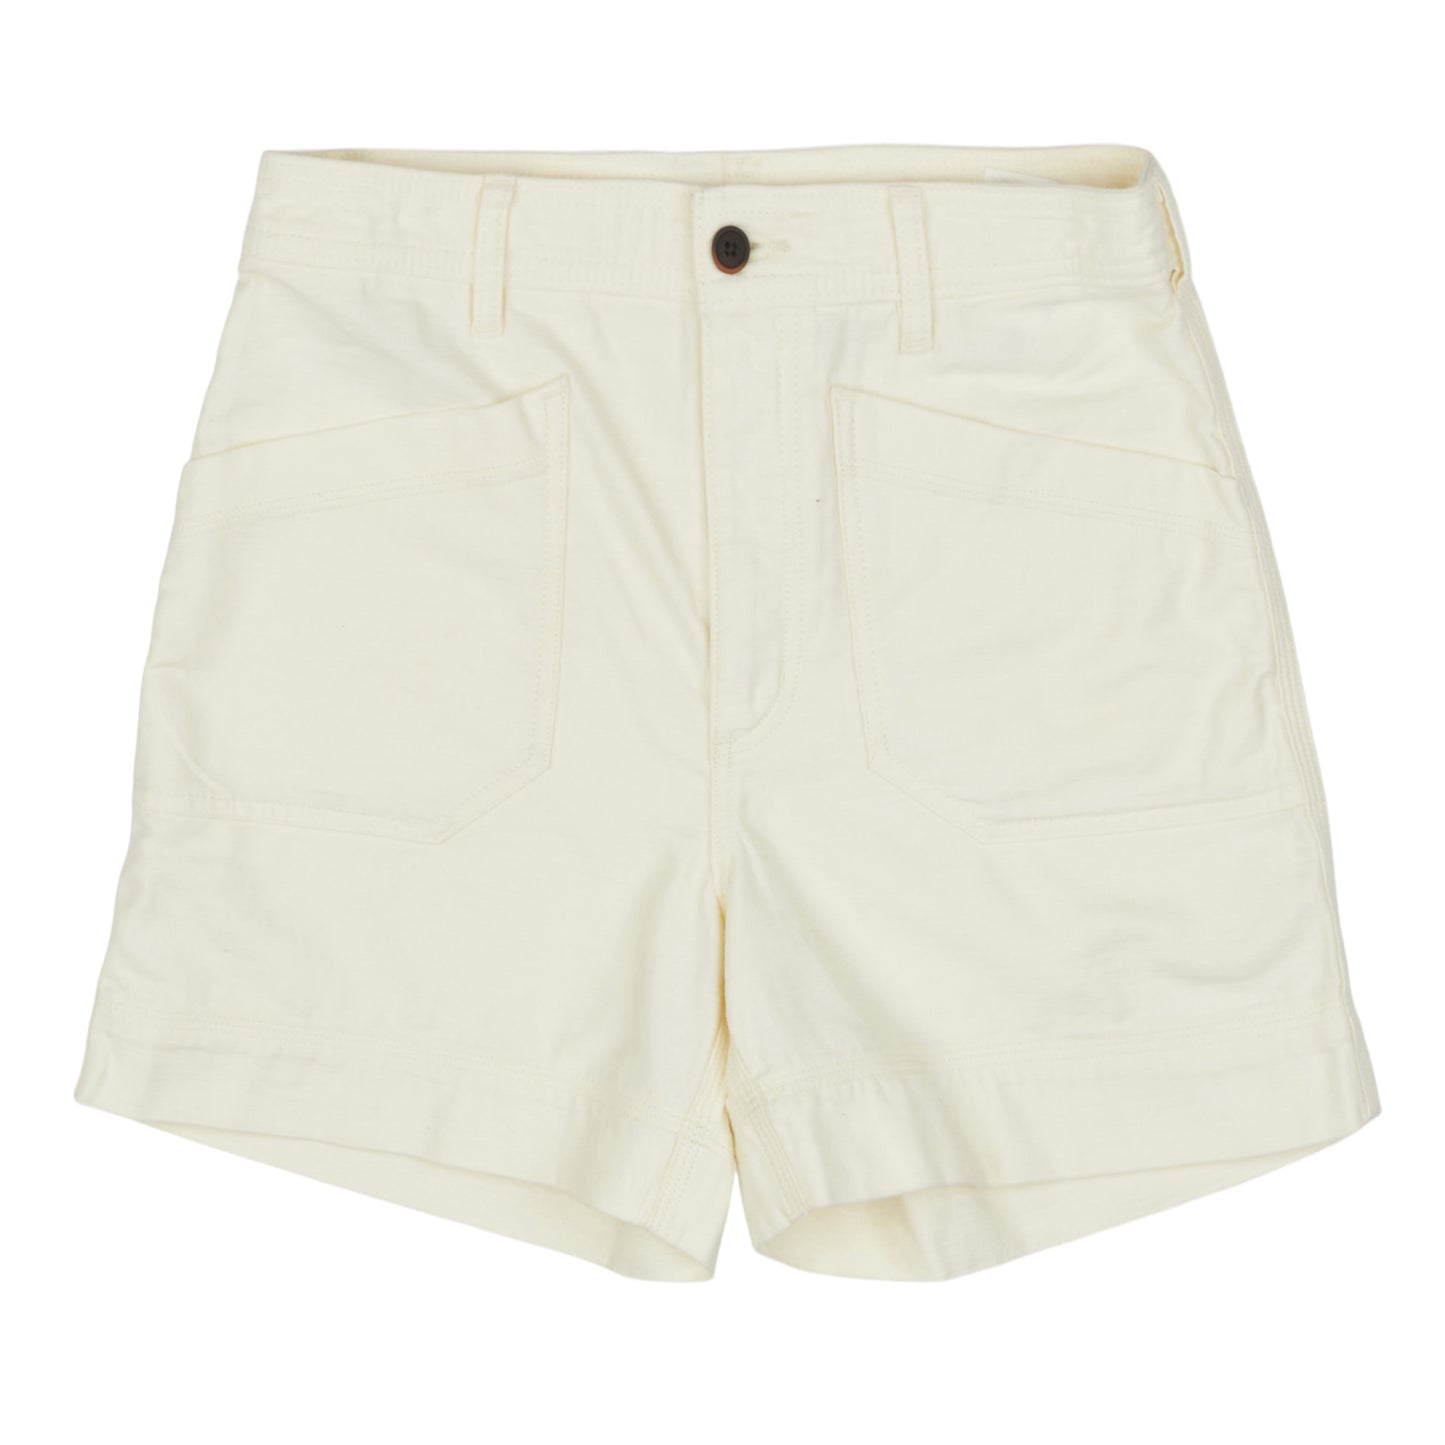 Women's Organic Cotton Slub Woven Shorts - 5""